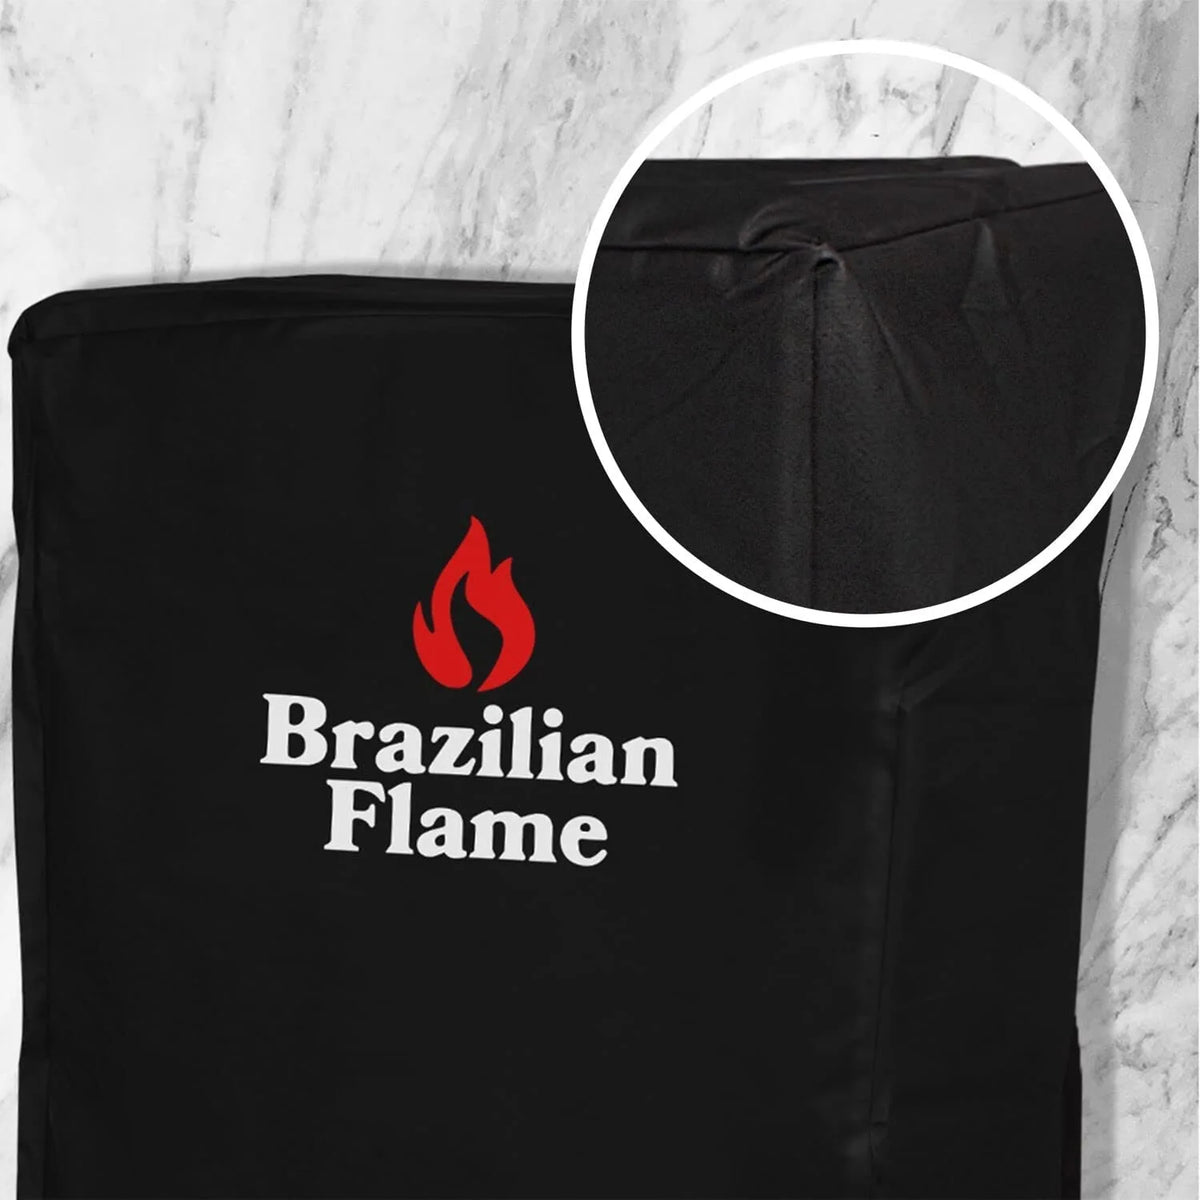 Brazilian Flame Grill Cover